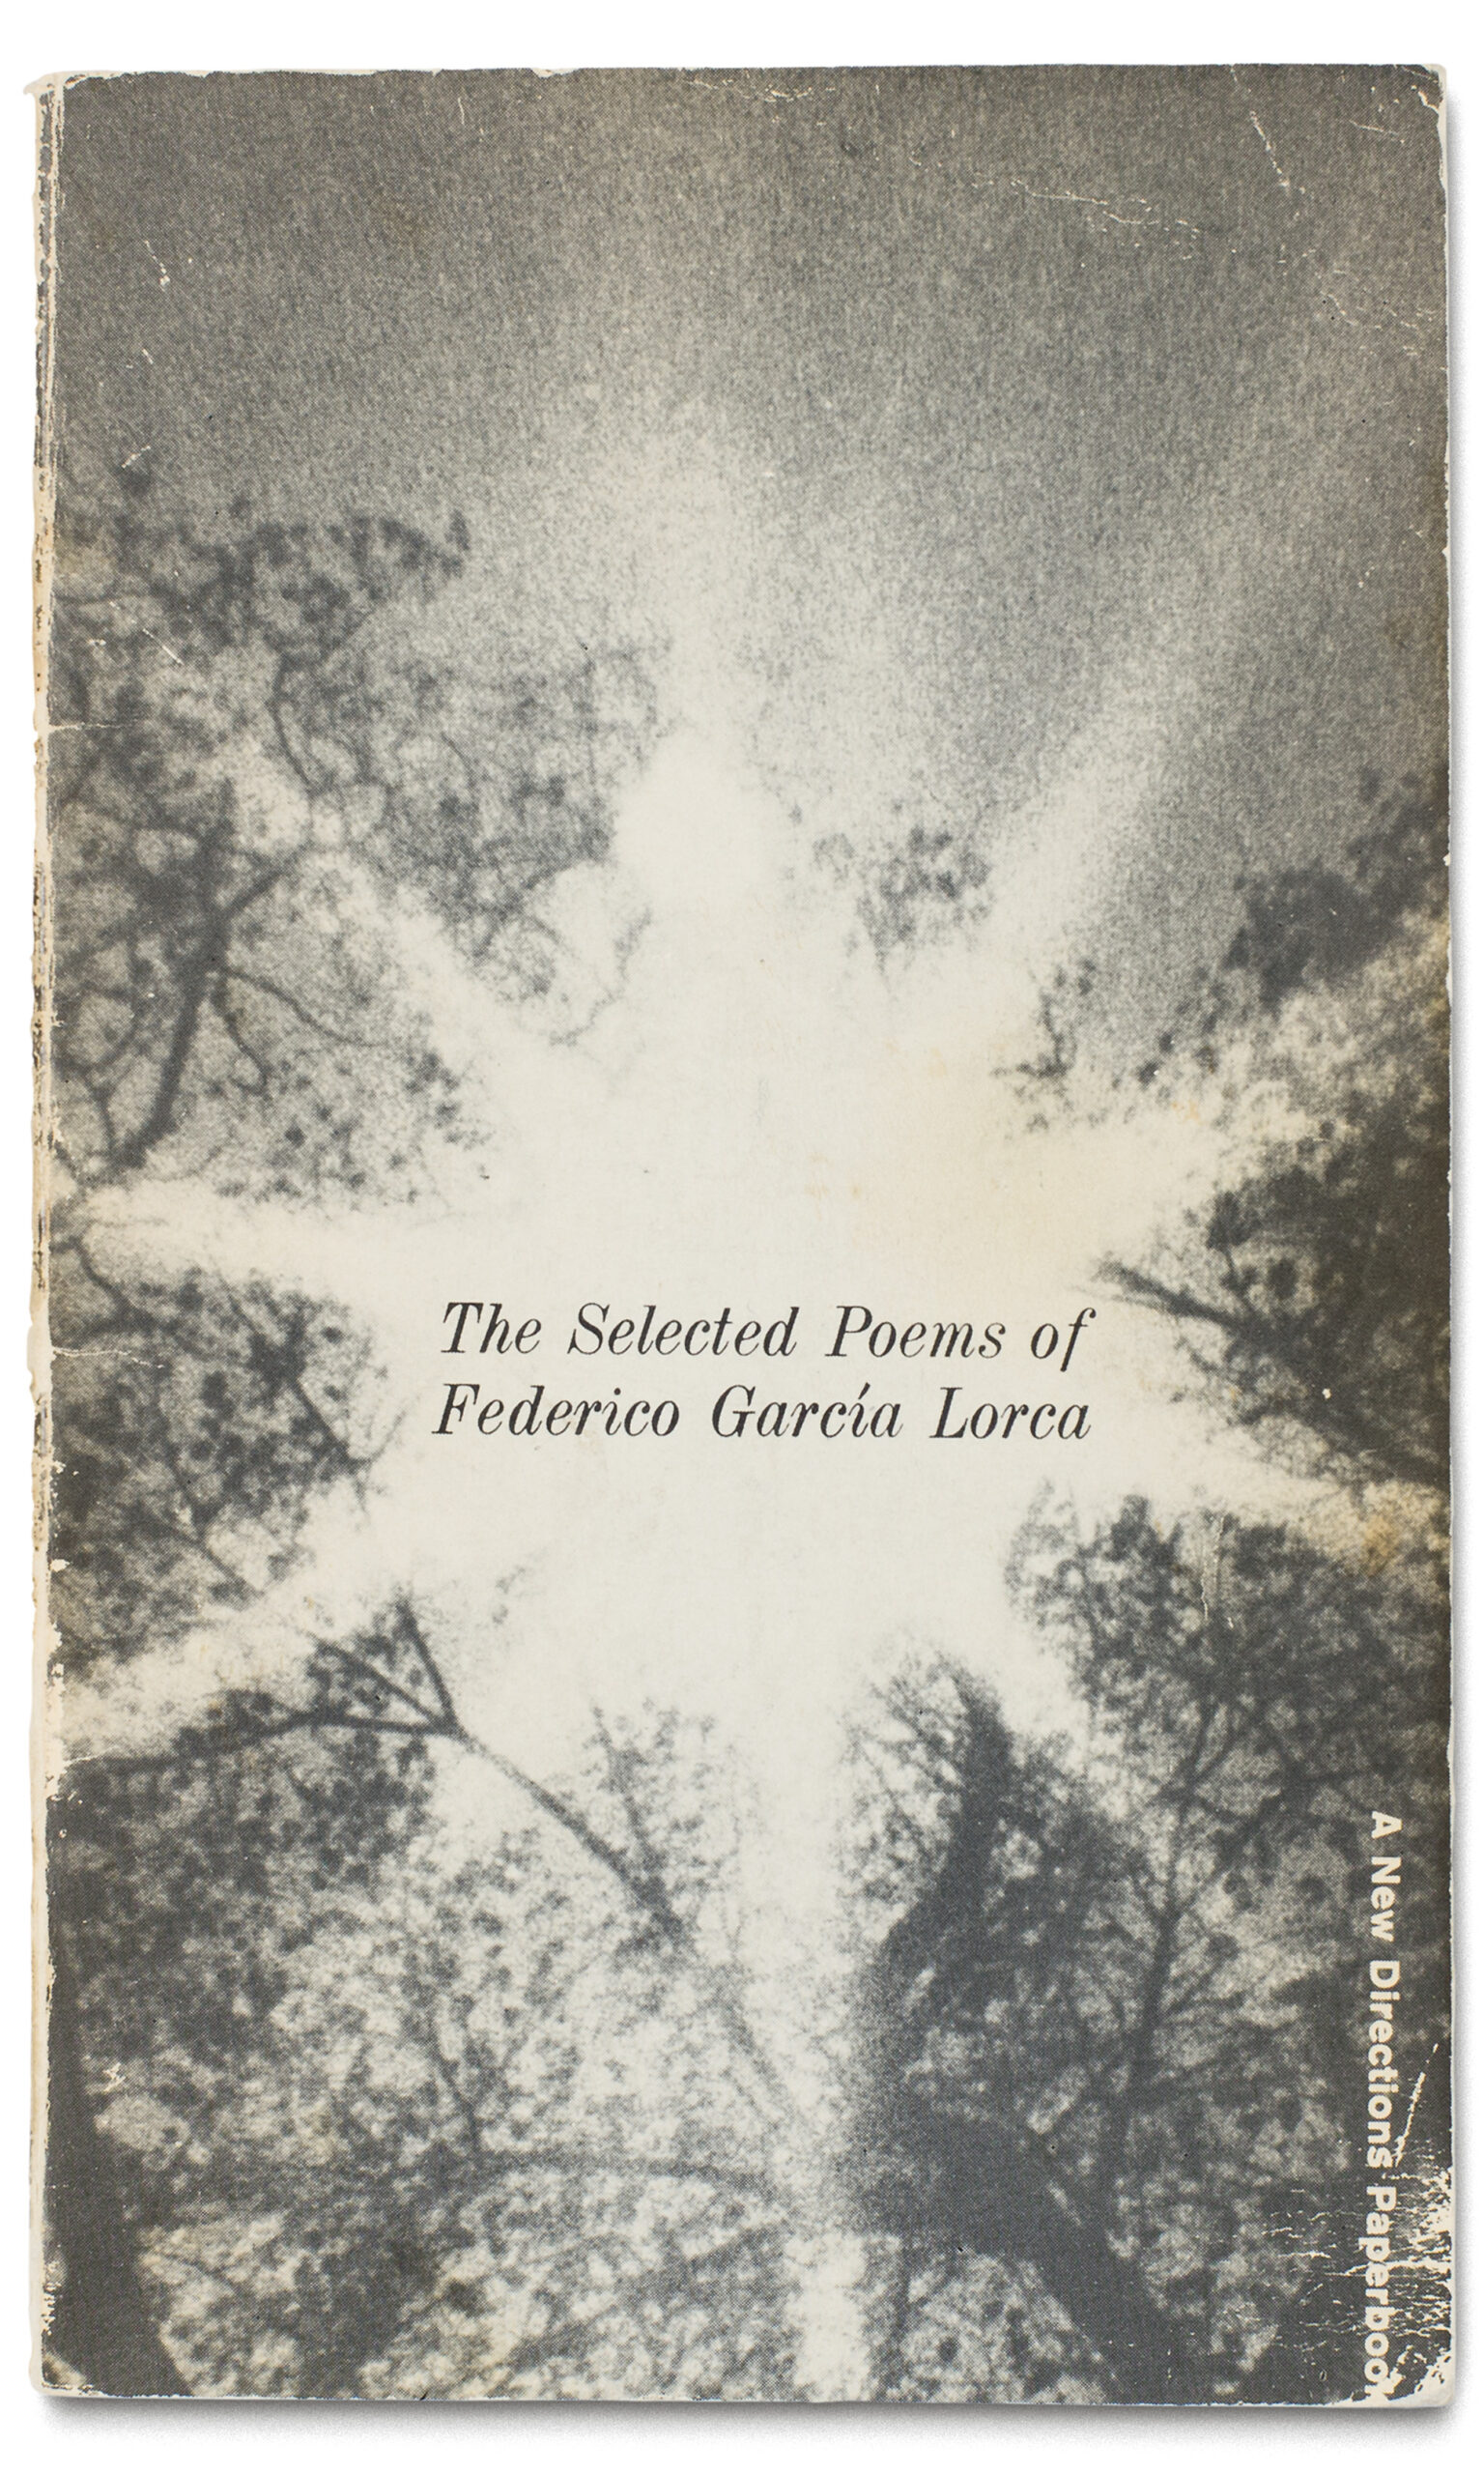 Cover of Federico García Lorca, <em>The Selected Poems of Federico García Lorca</em>, 1968″>
		</div>
		<div class=